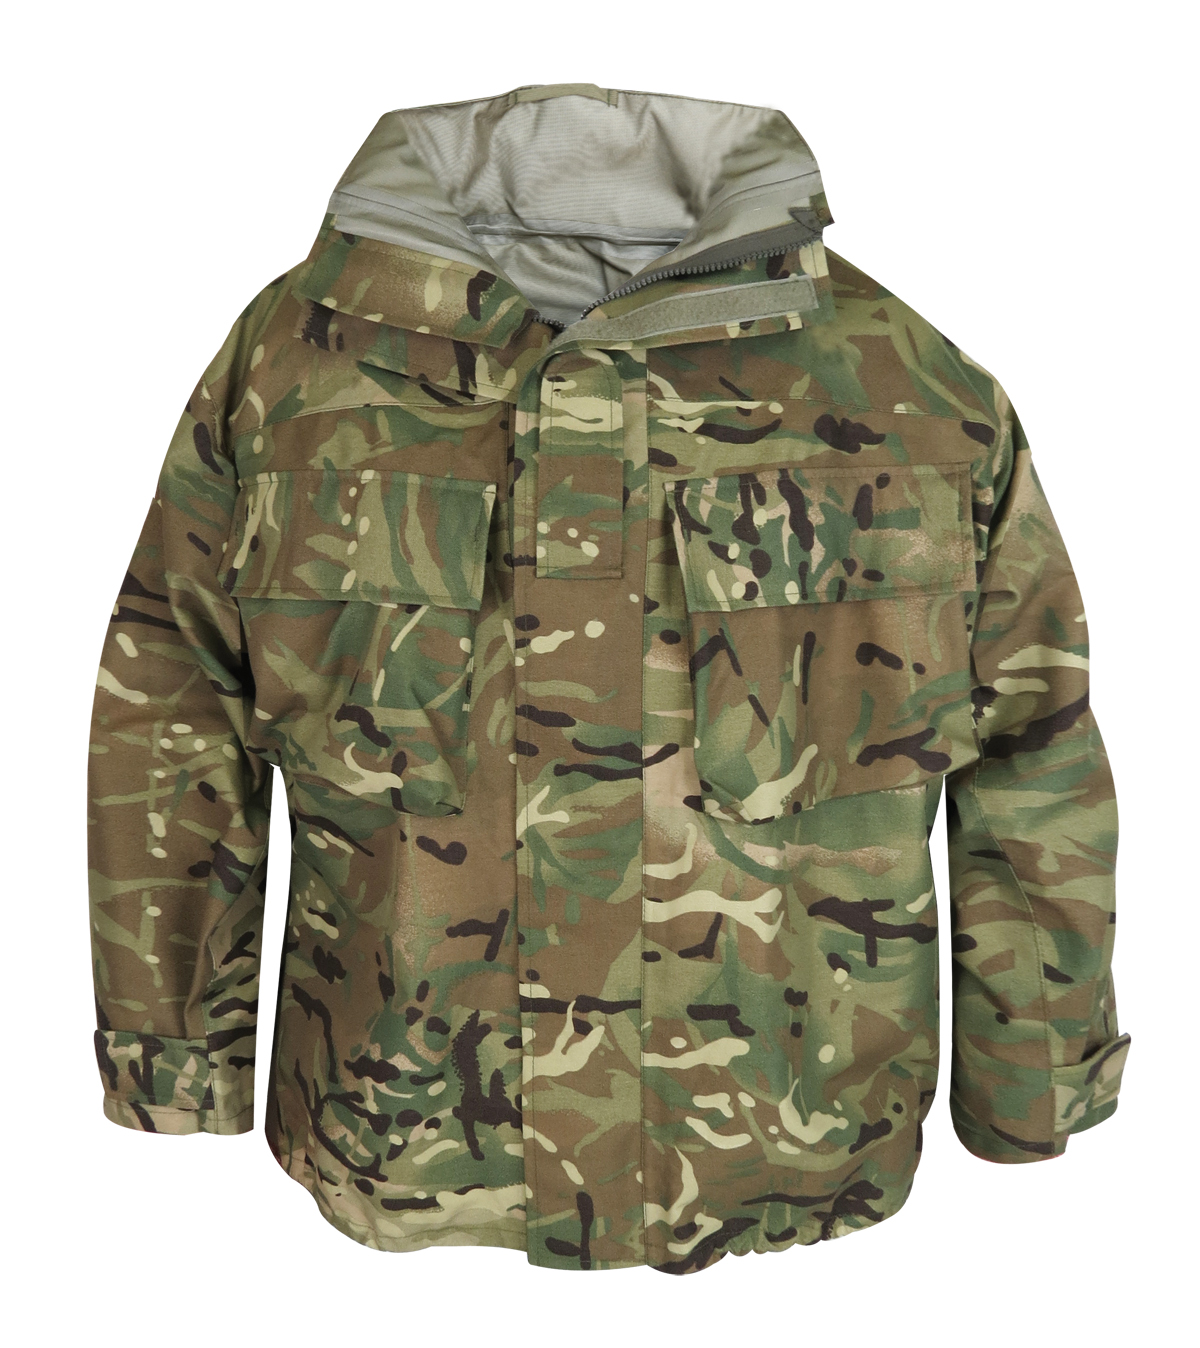 British Army Surplus Mtp Goretex Jacket All Sizes Picclick | My XXX Hot ...